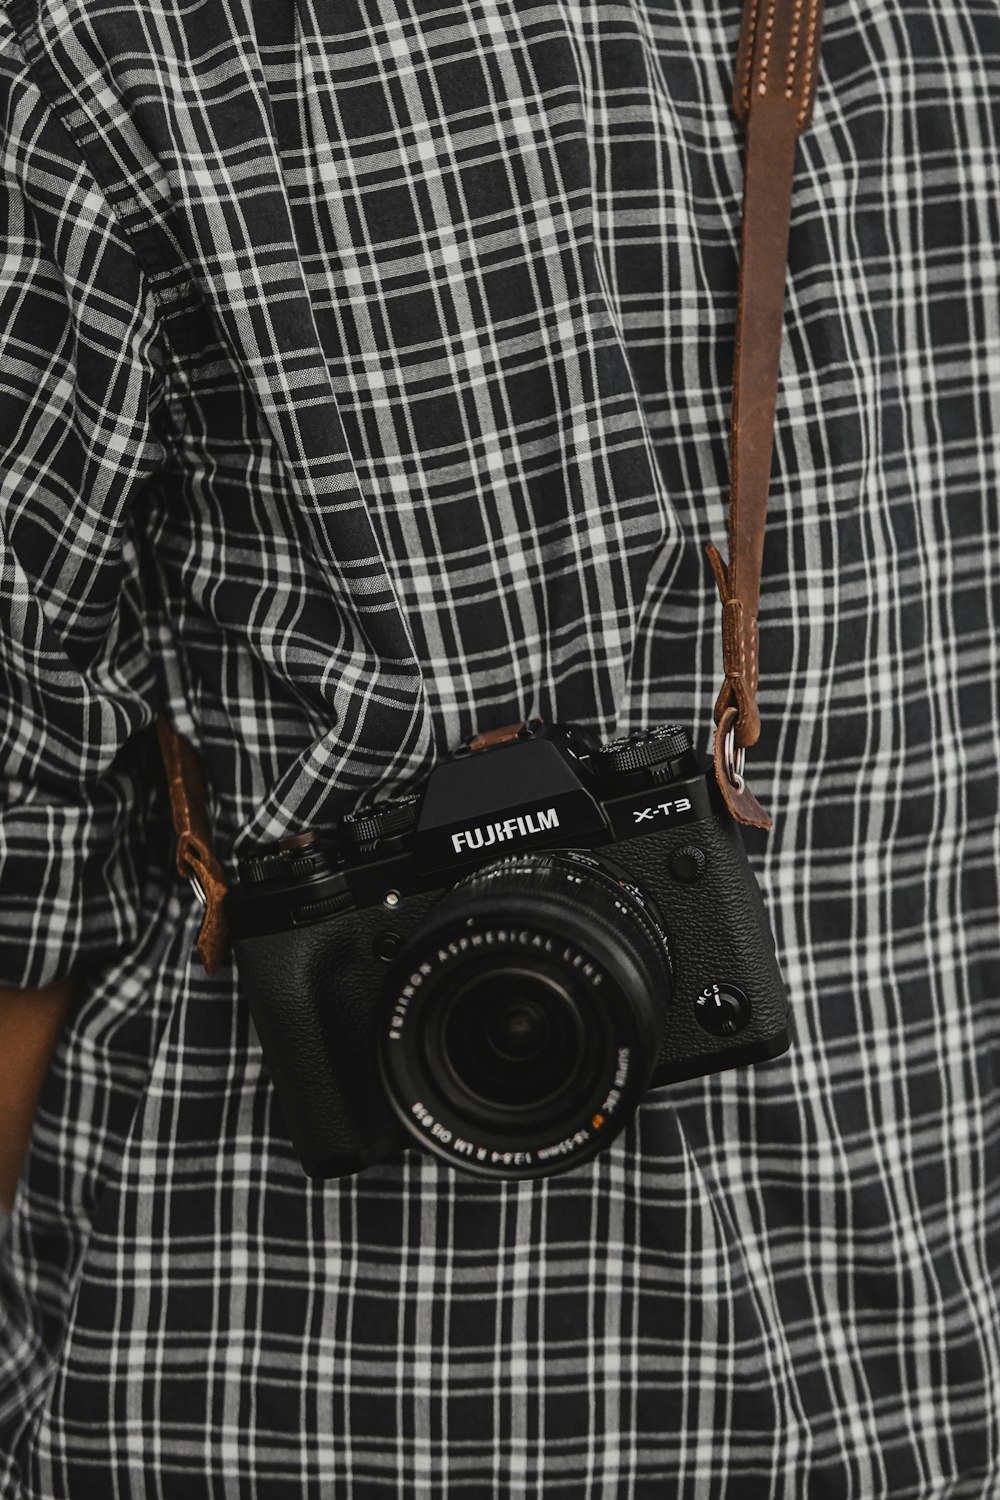 black nikon dslr camera on white and black checkered textile